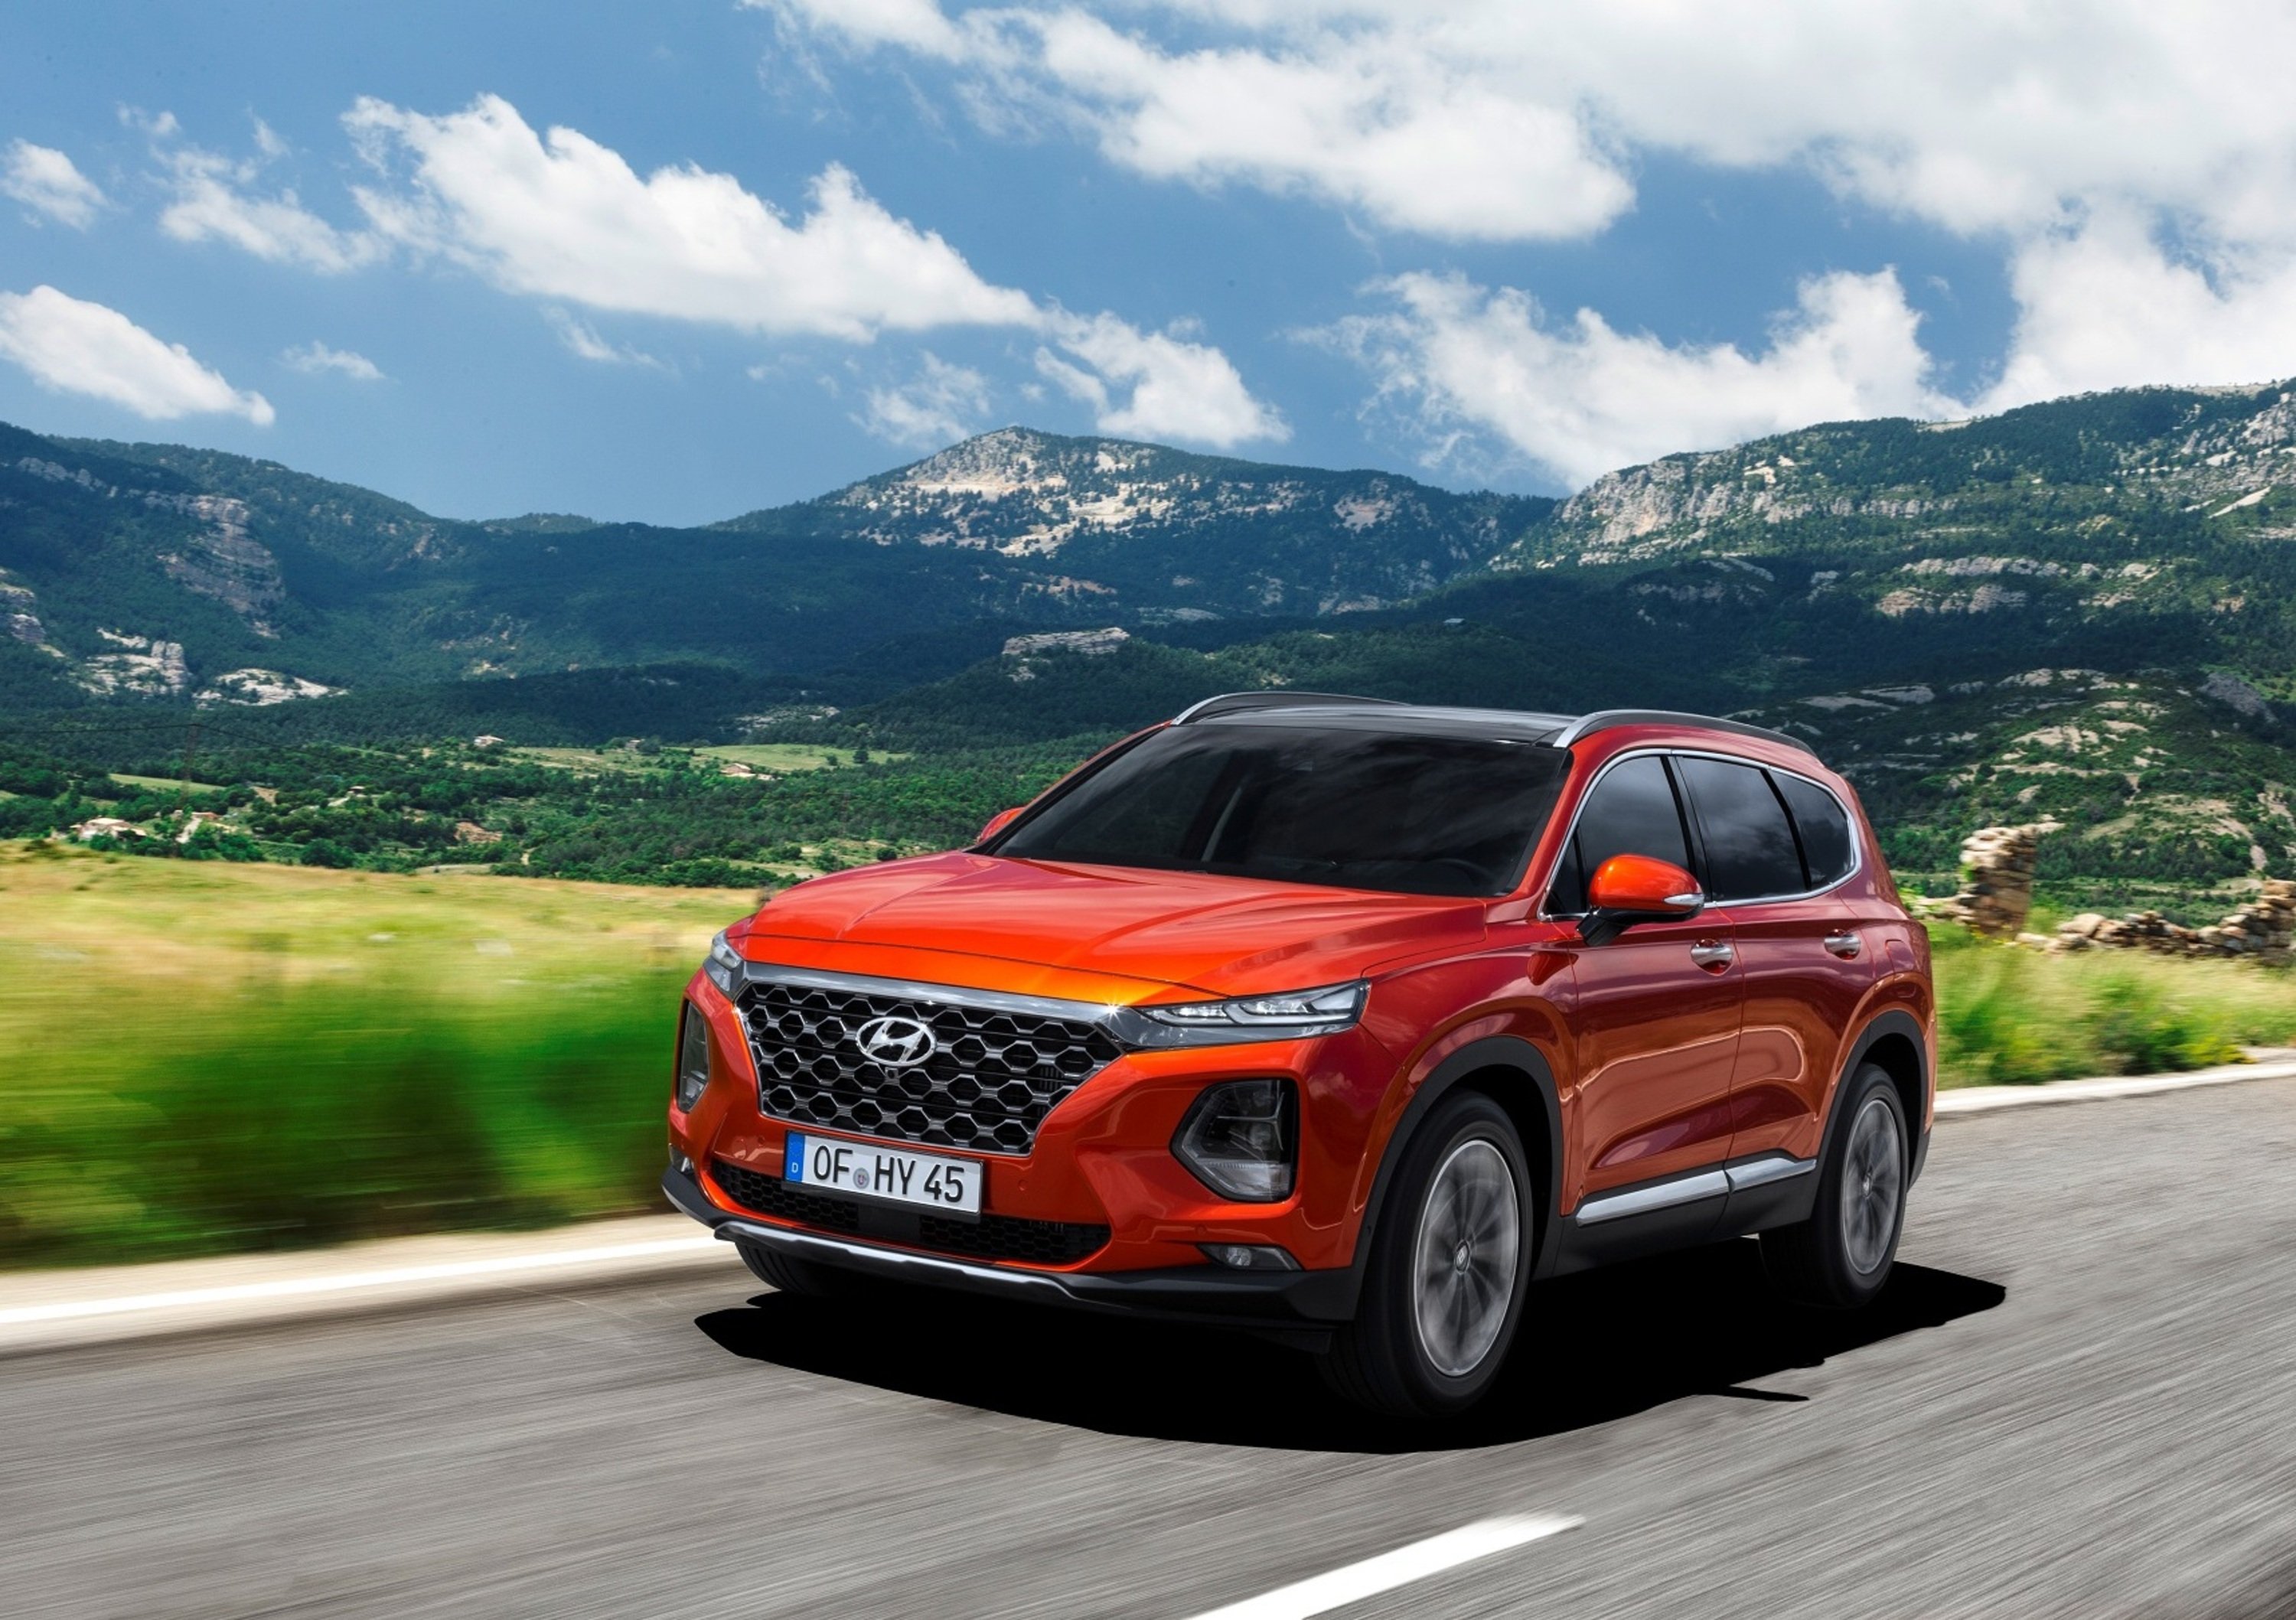 Hyundai Santa Fe 2018, si parte da 45.450 euro